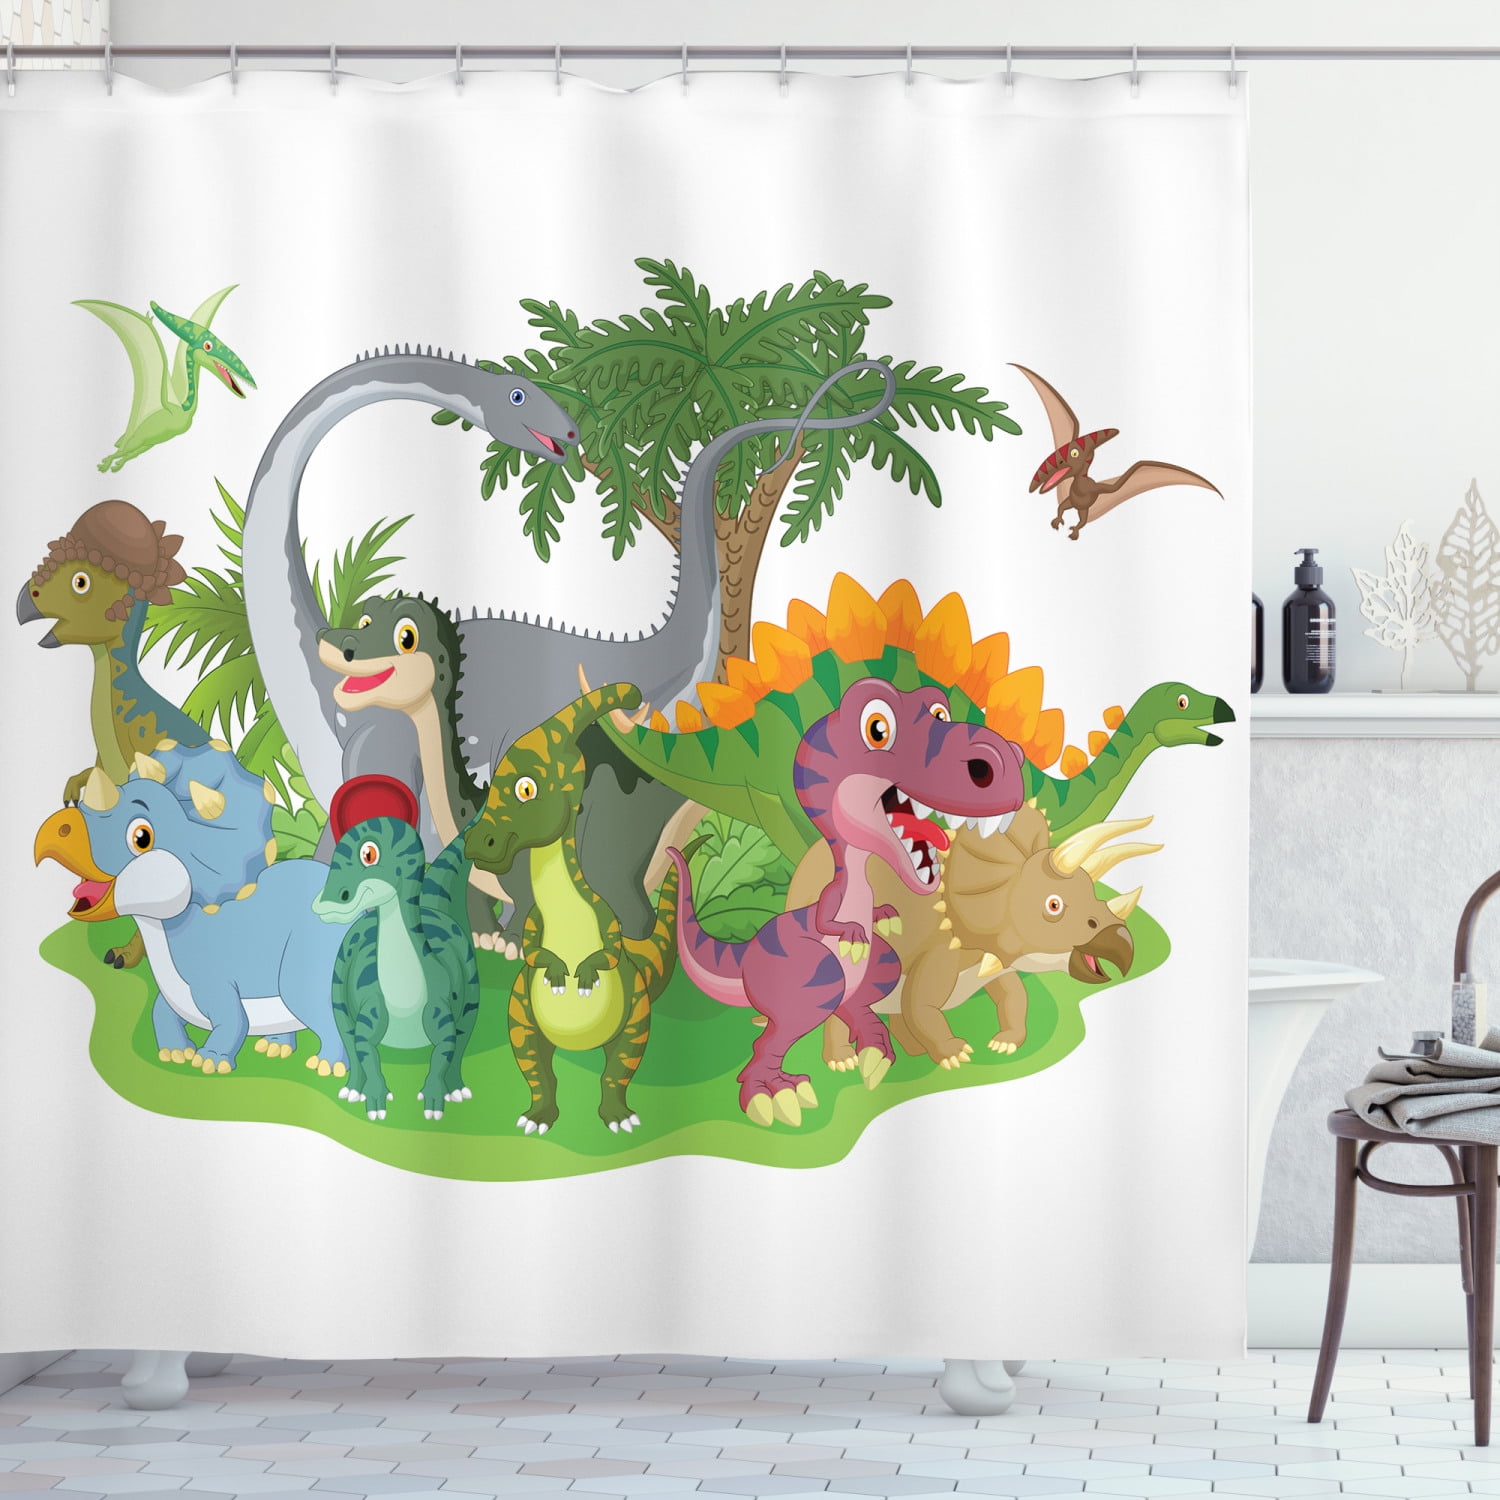 Details about   Cartoon Shower Curtain Happy Children Safari Print for Bathroom 